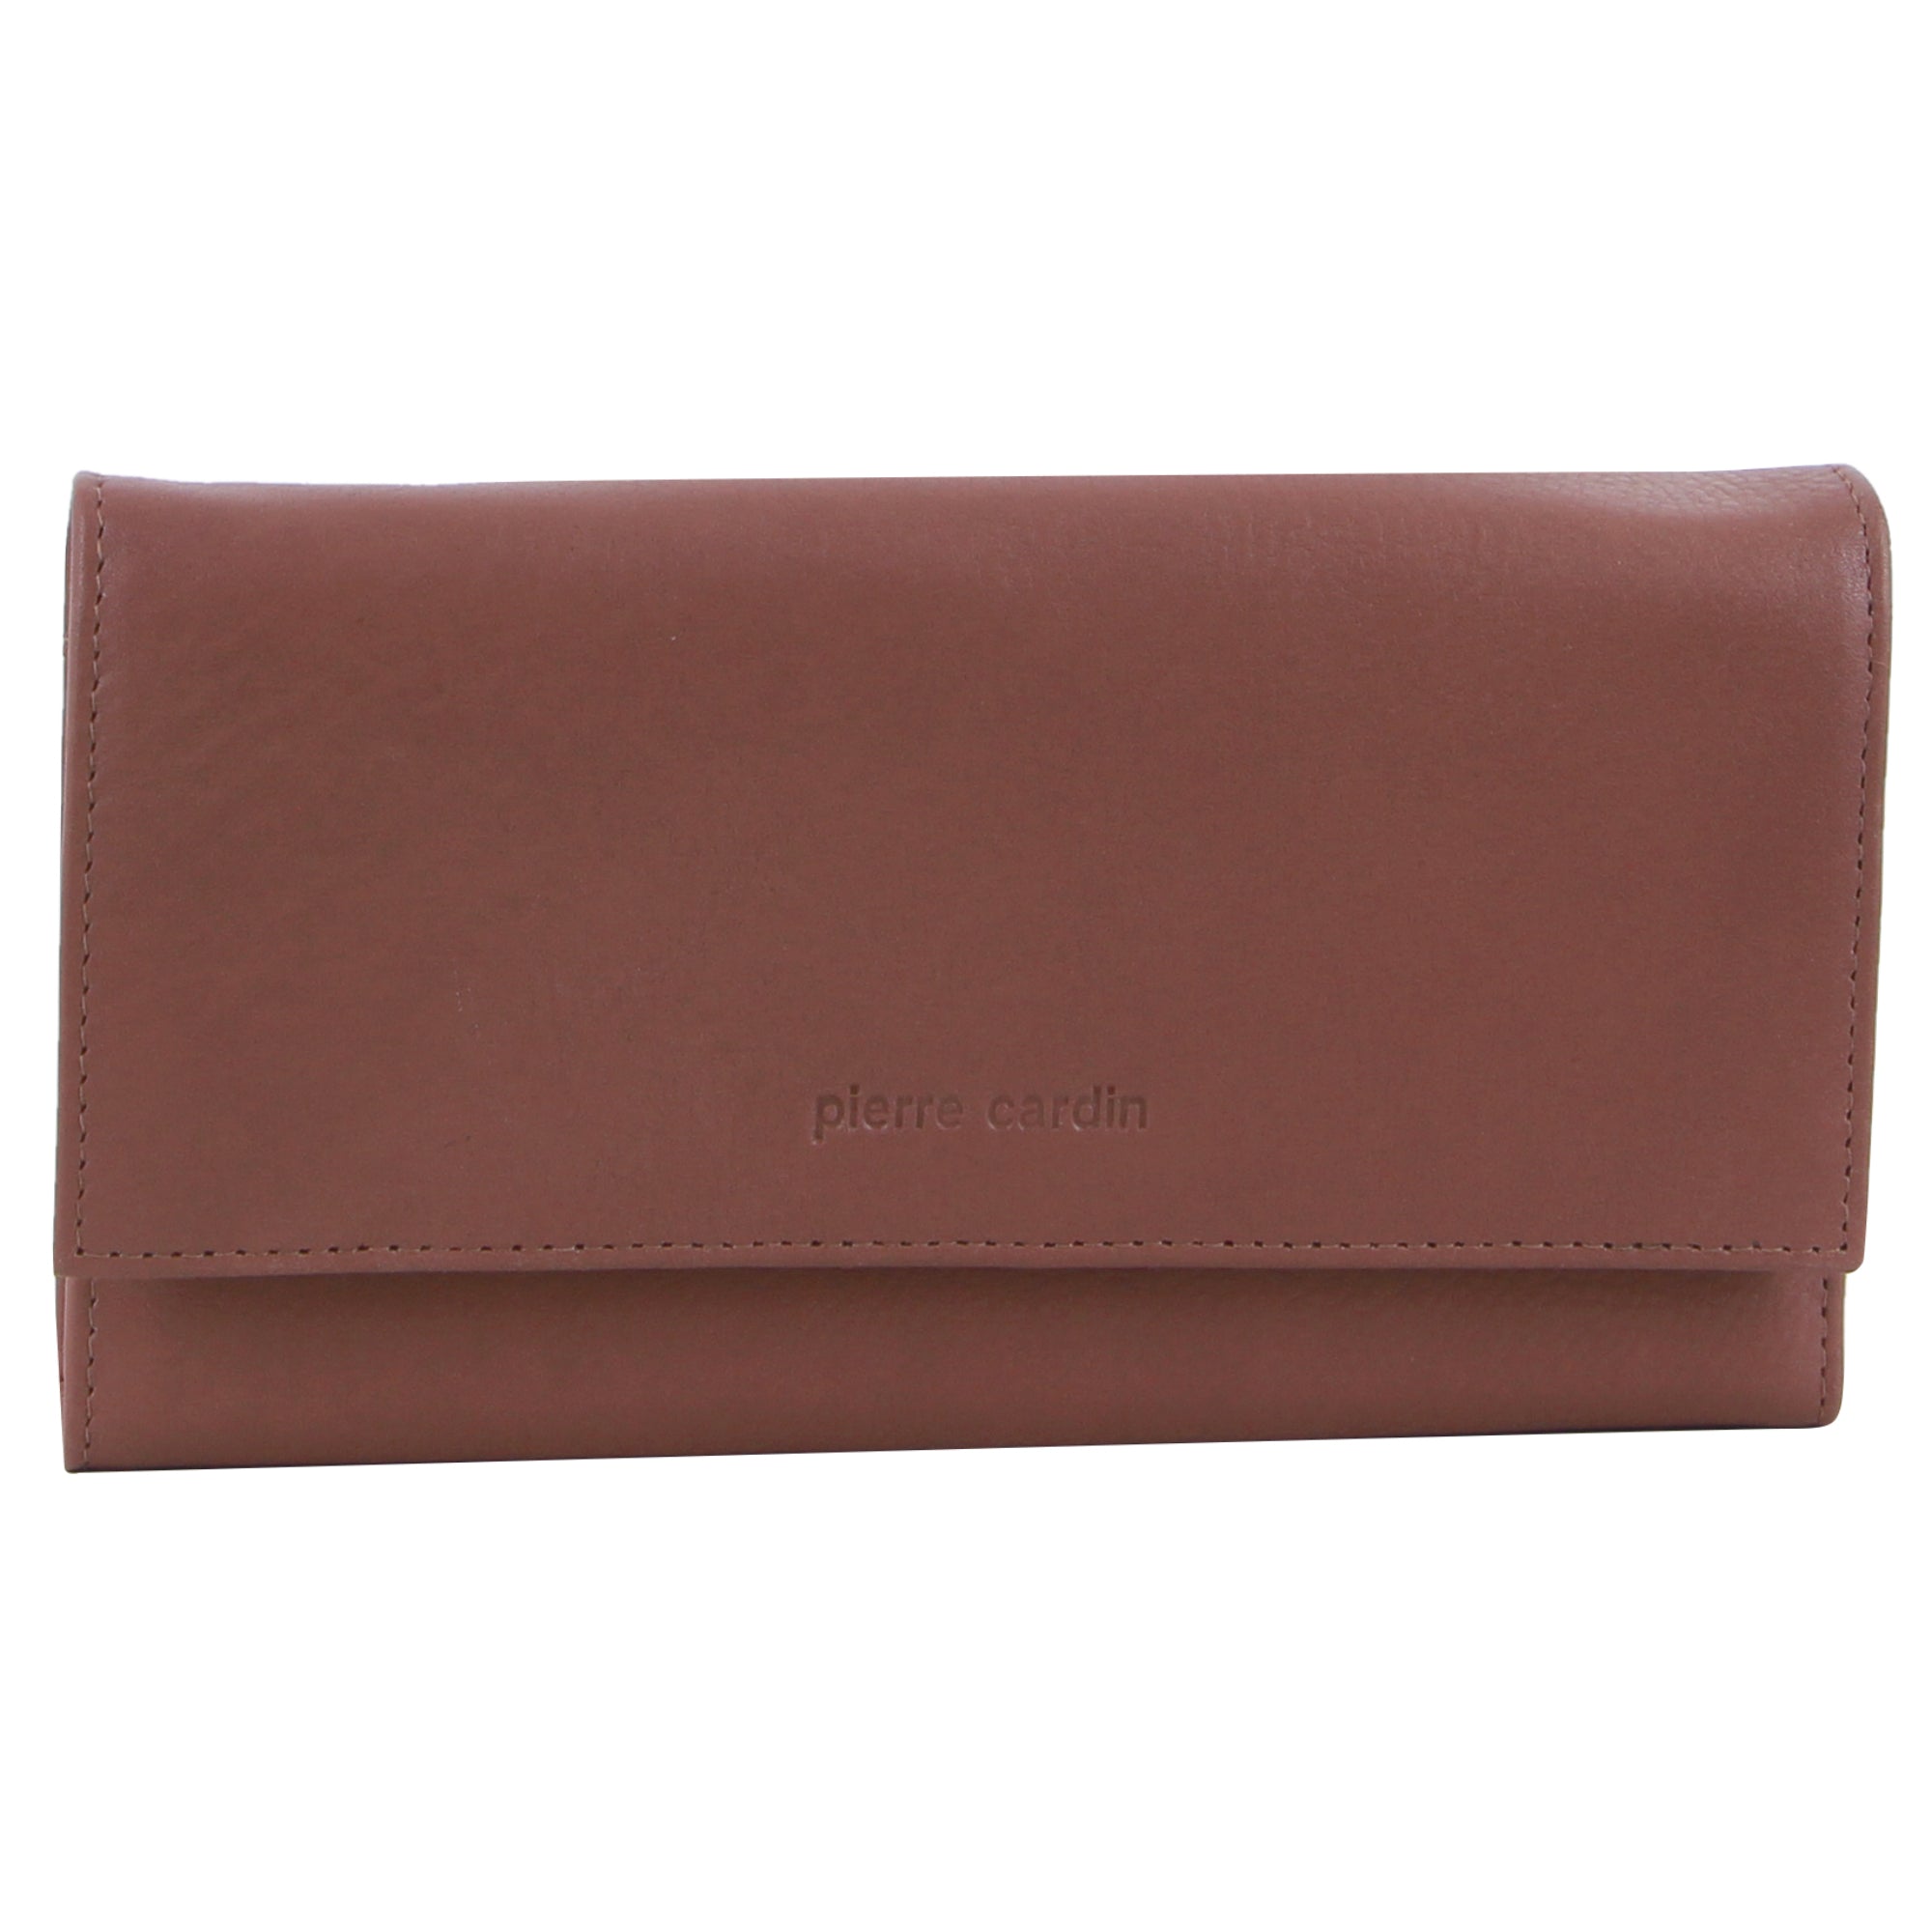 Pierre Cardin Rustic Leather Ladies Wallet in Red